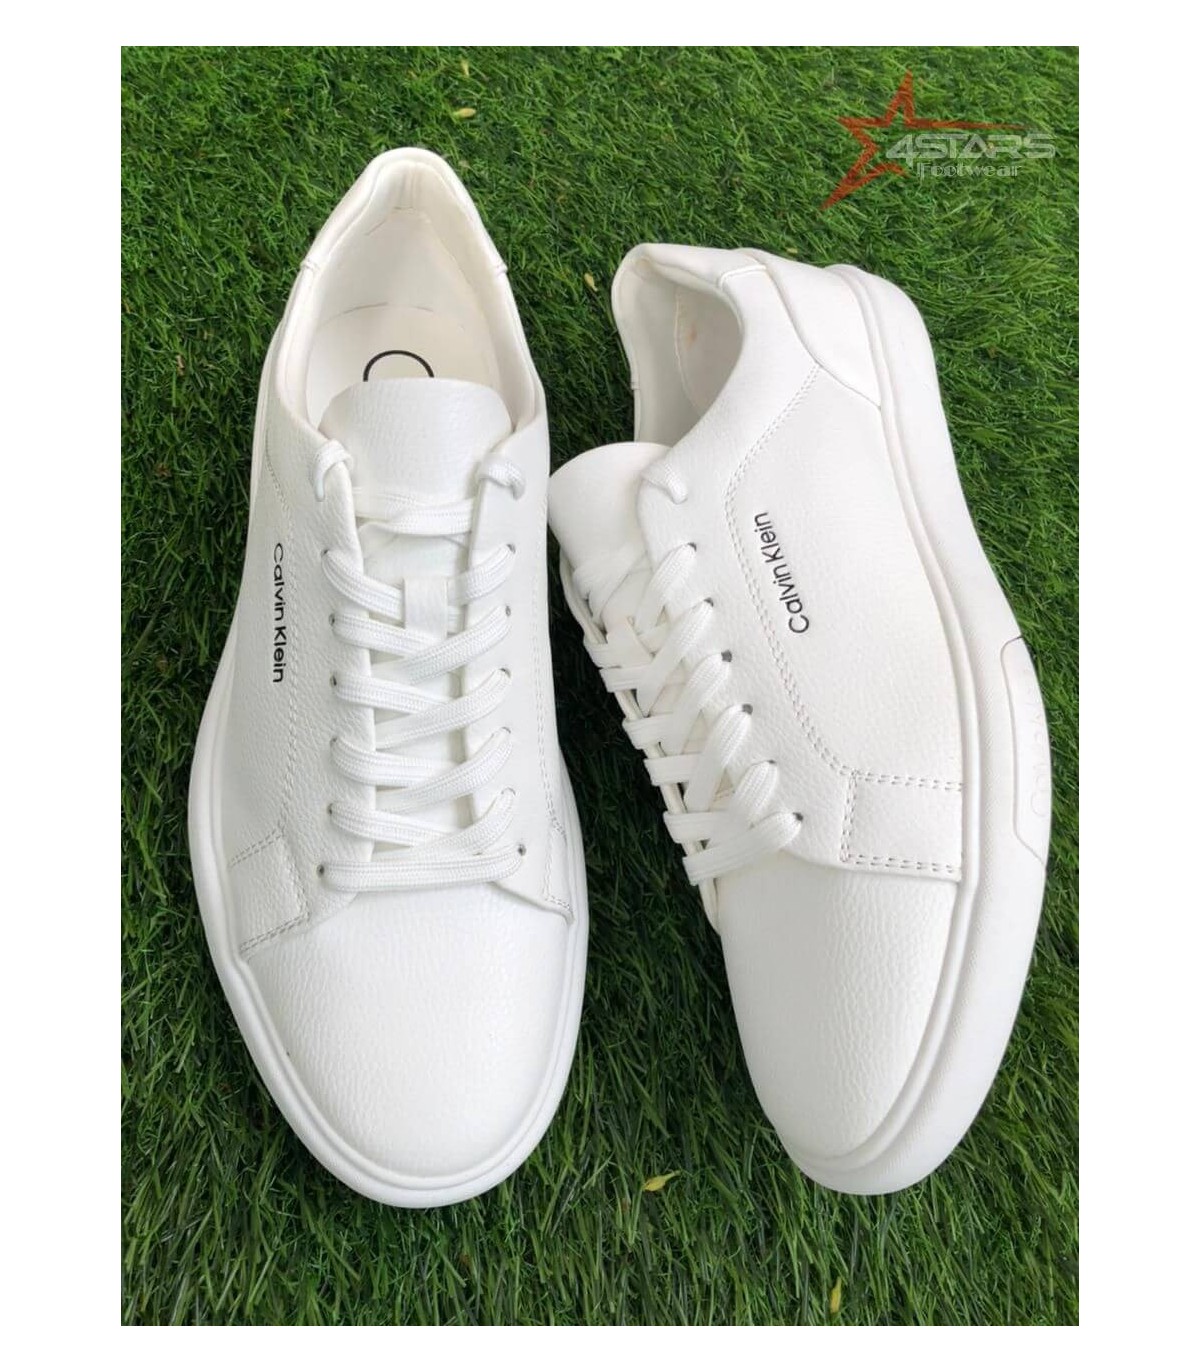 Calvin Klein Leather Sneakers - All White